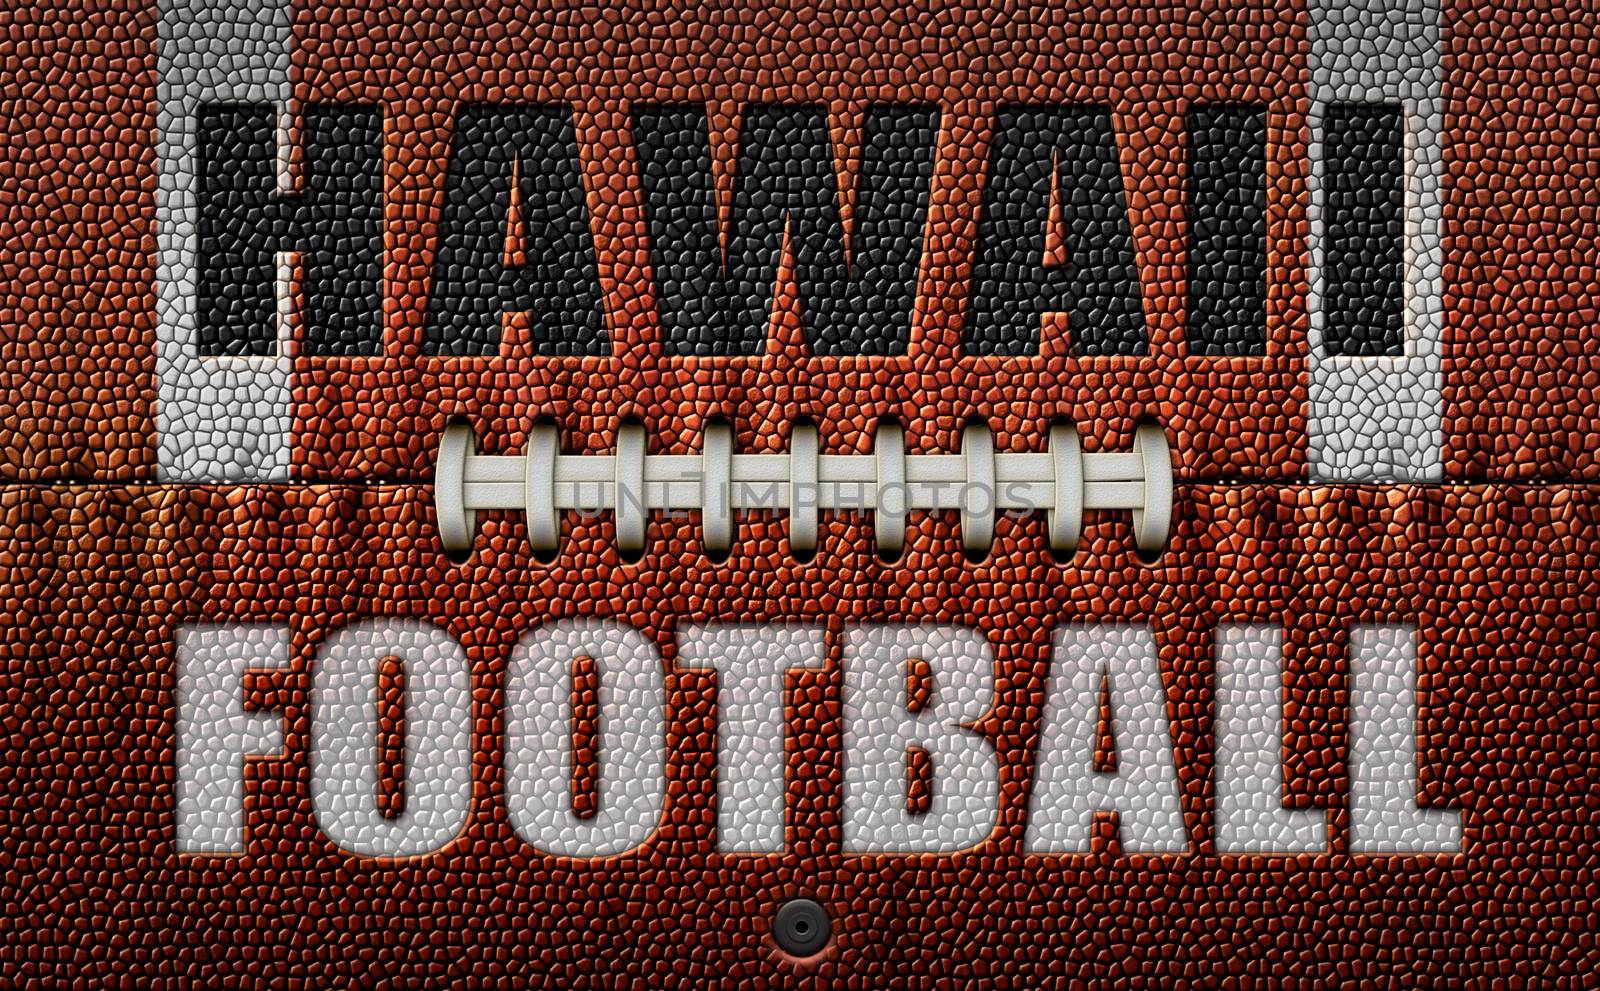 Hawaii Football Text on a Flattened Football by jimlarkin